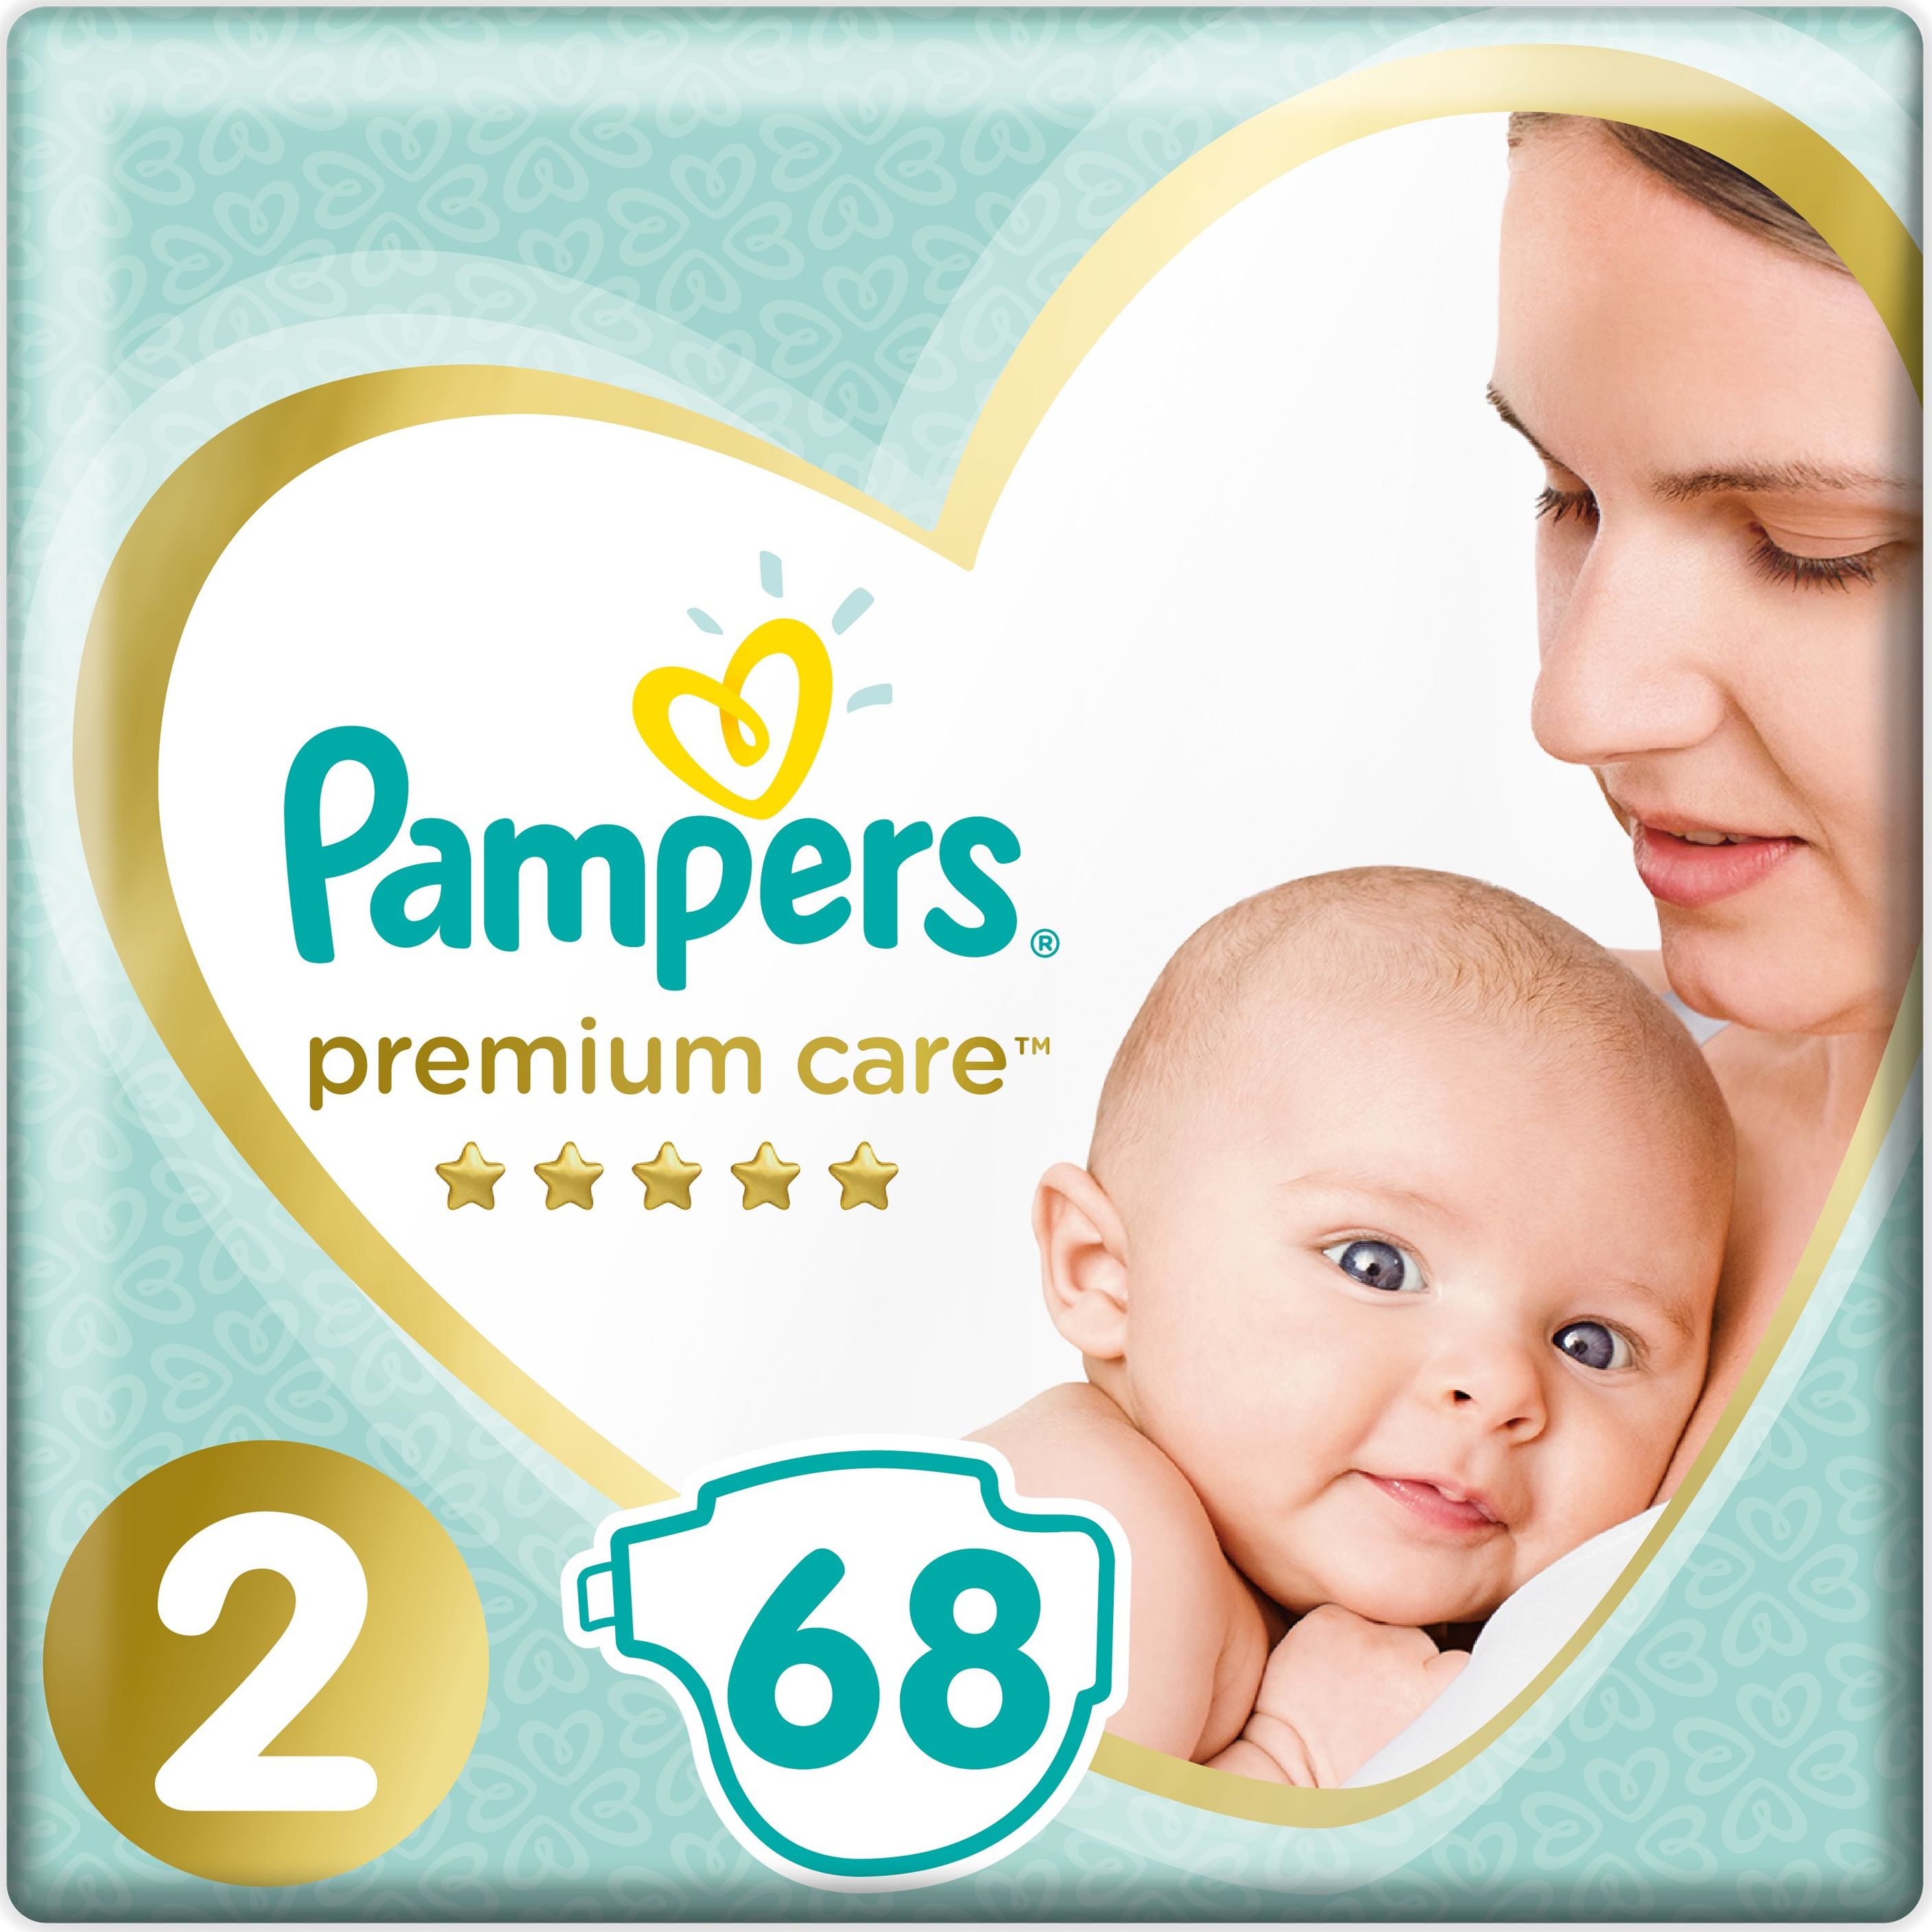 Pampers Diaper set Premium Care VP 2 (4-8 kg) 68 pcs.